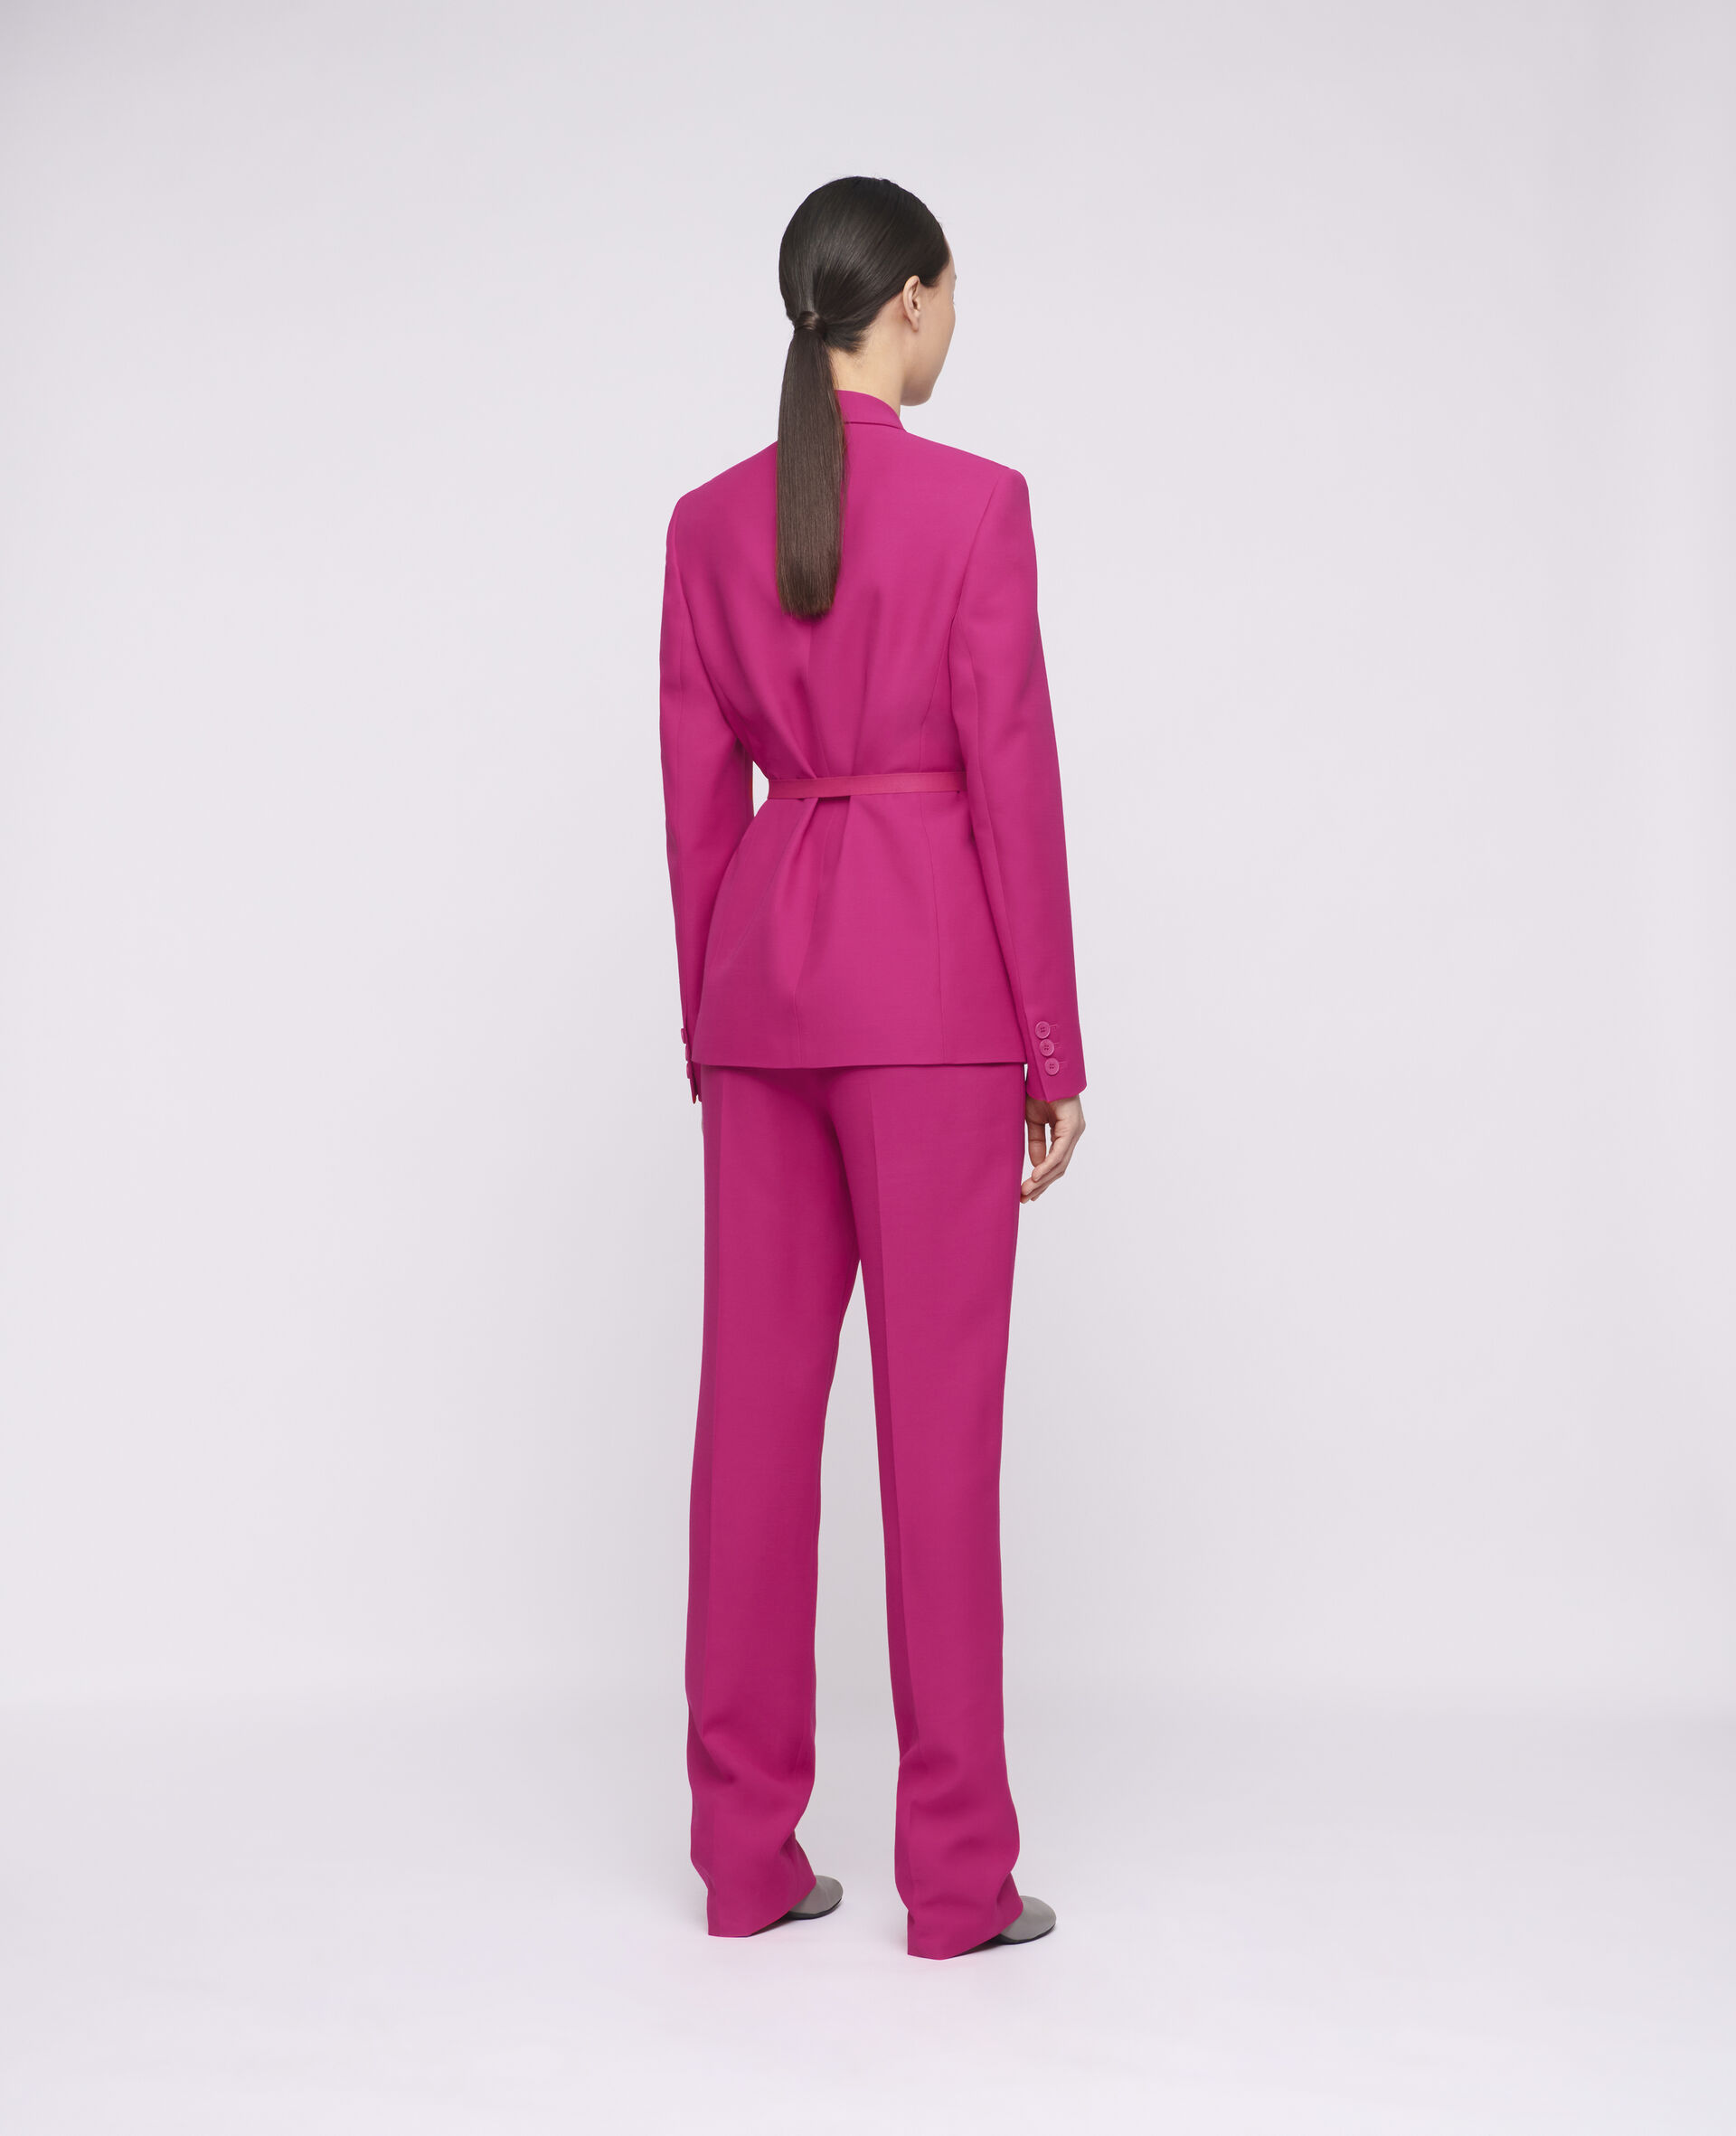 Lisa Tailored Jacket-Pink-large image number 2